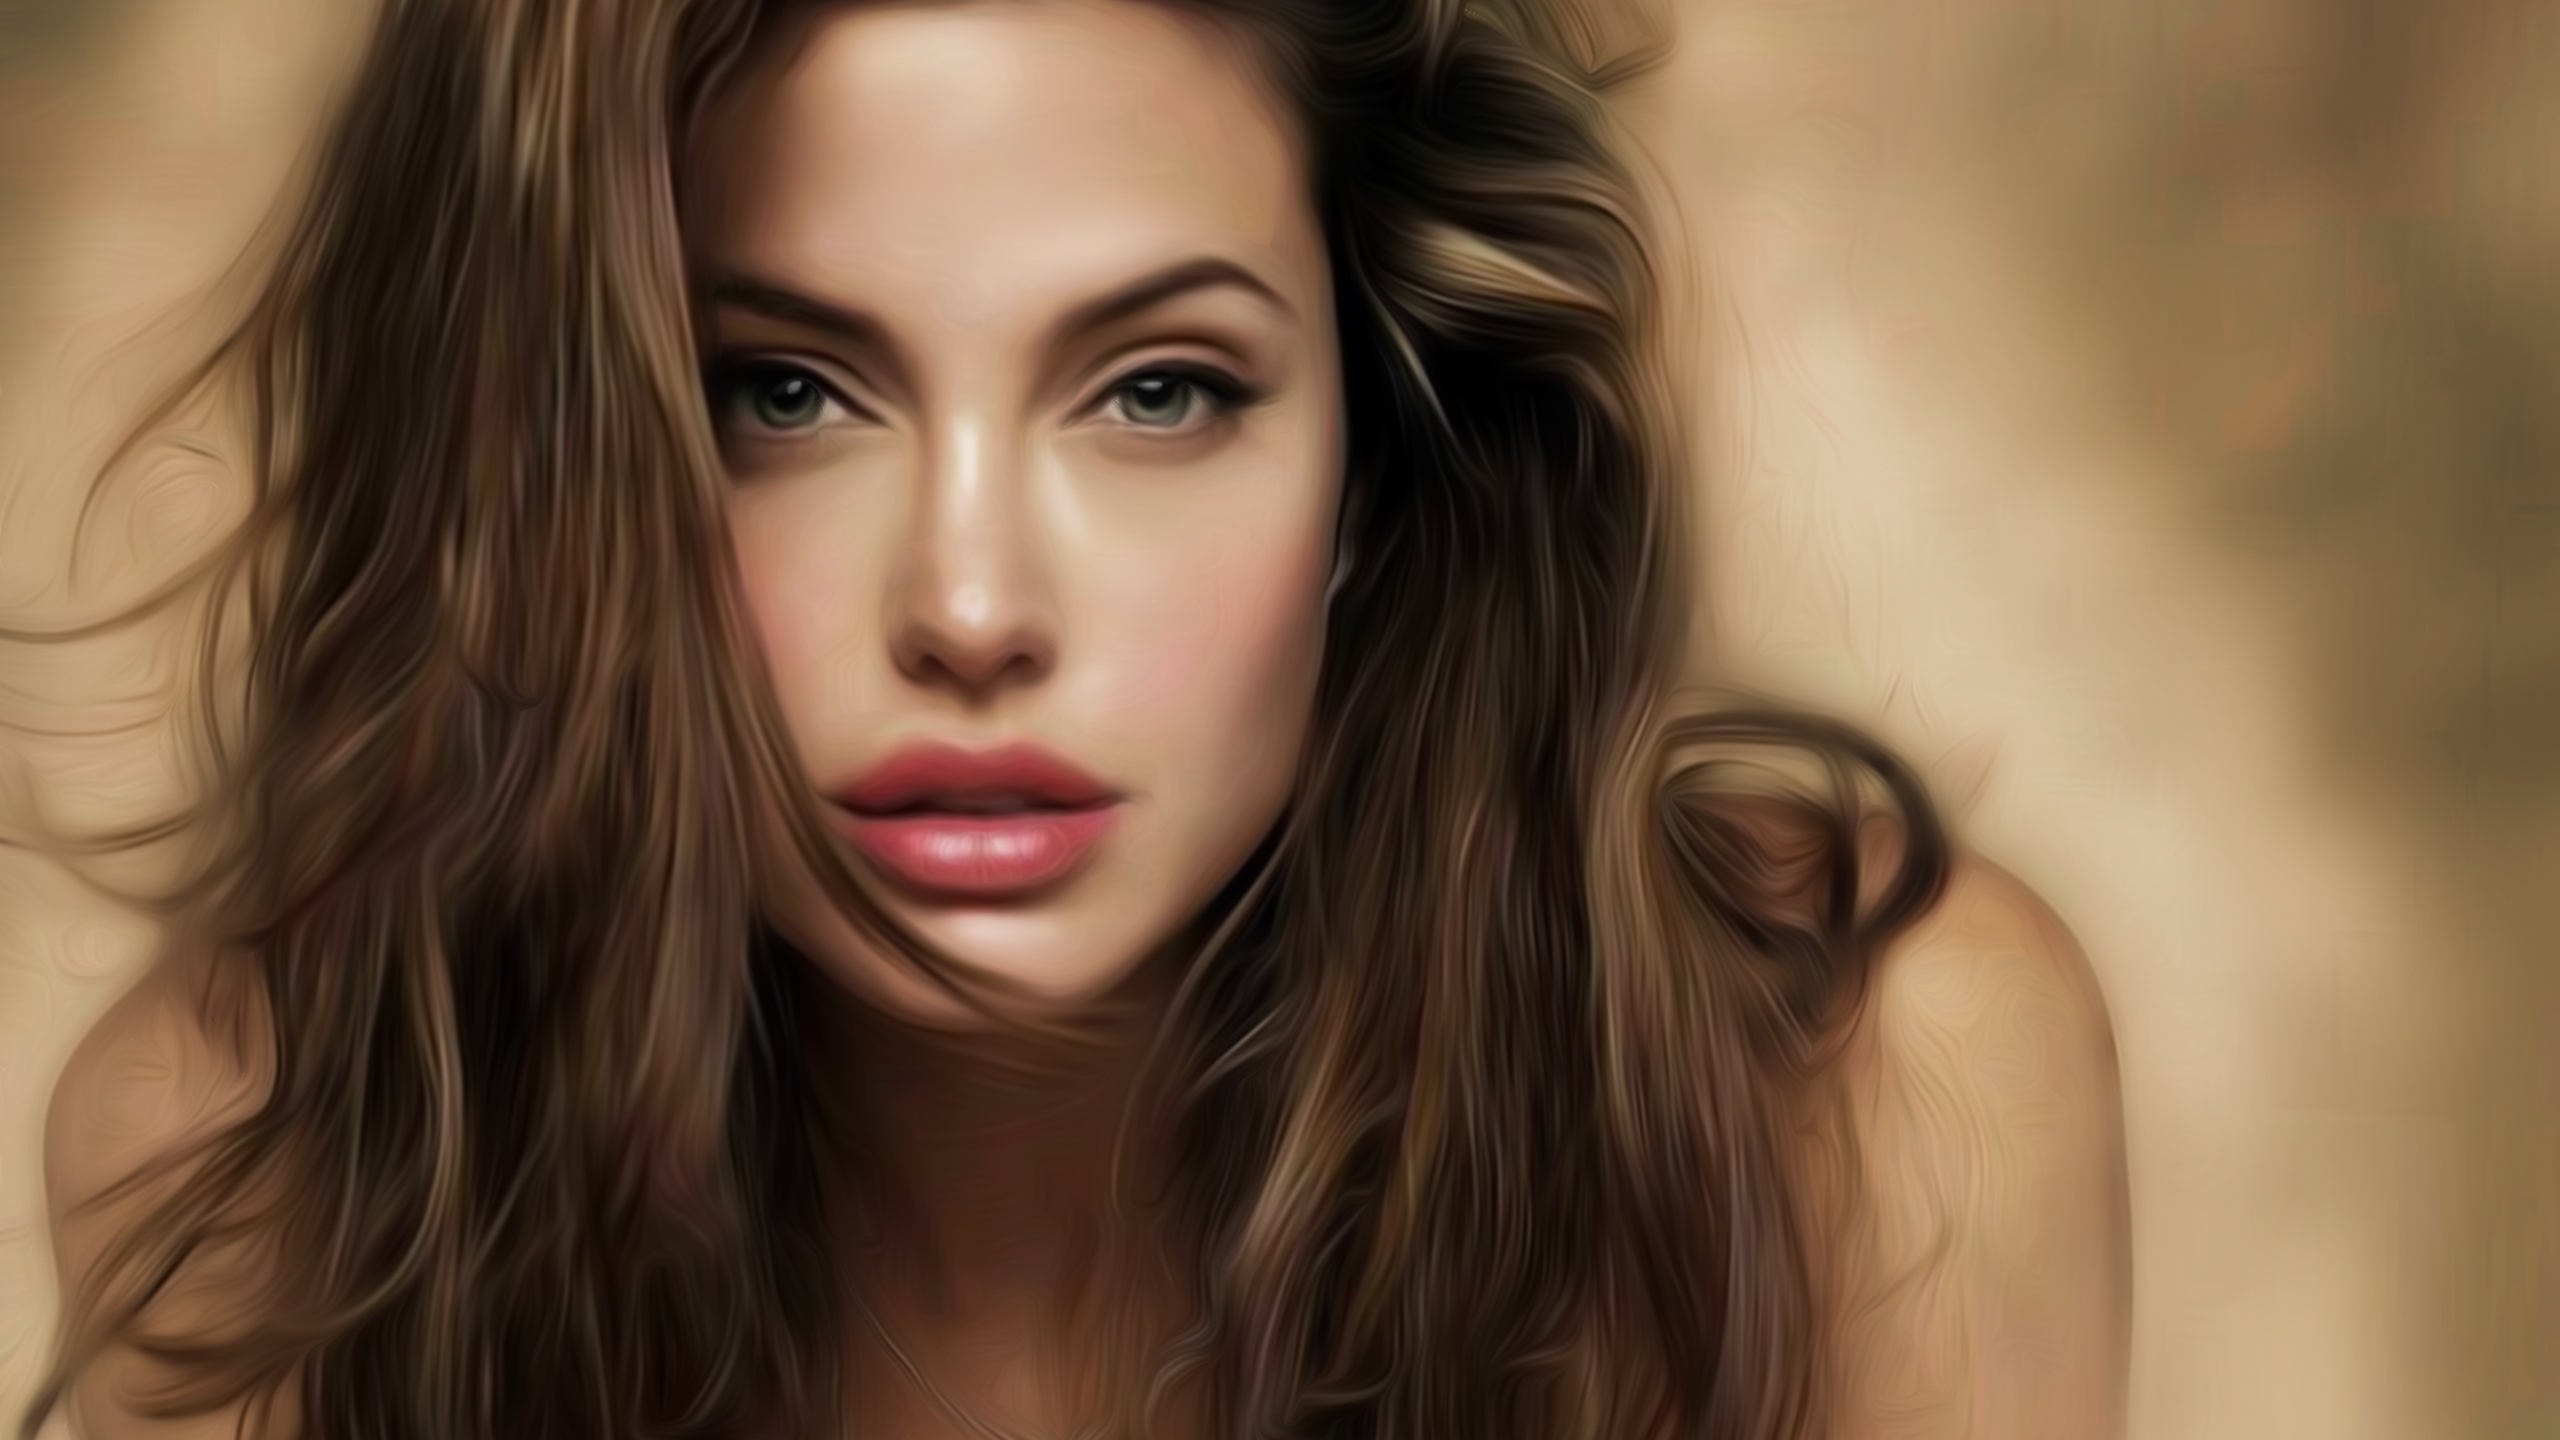 Angelina Jolie Look Art for 2560x1440 HDTV resolution